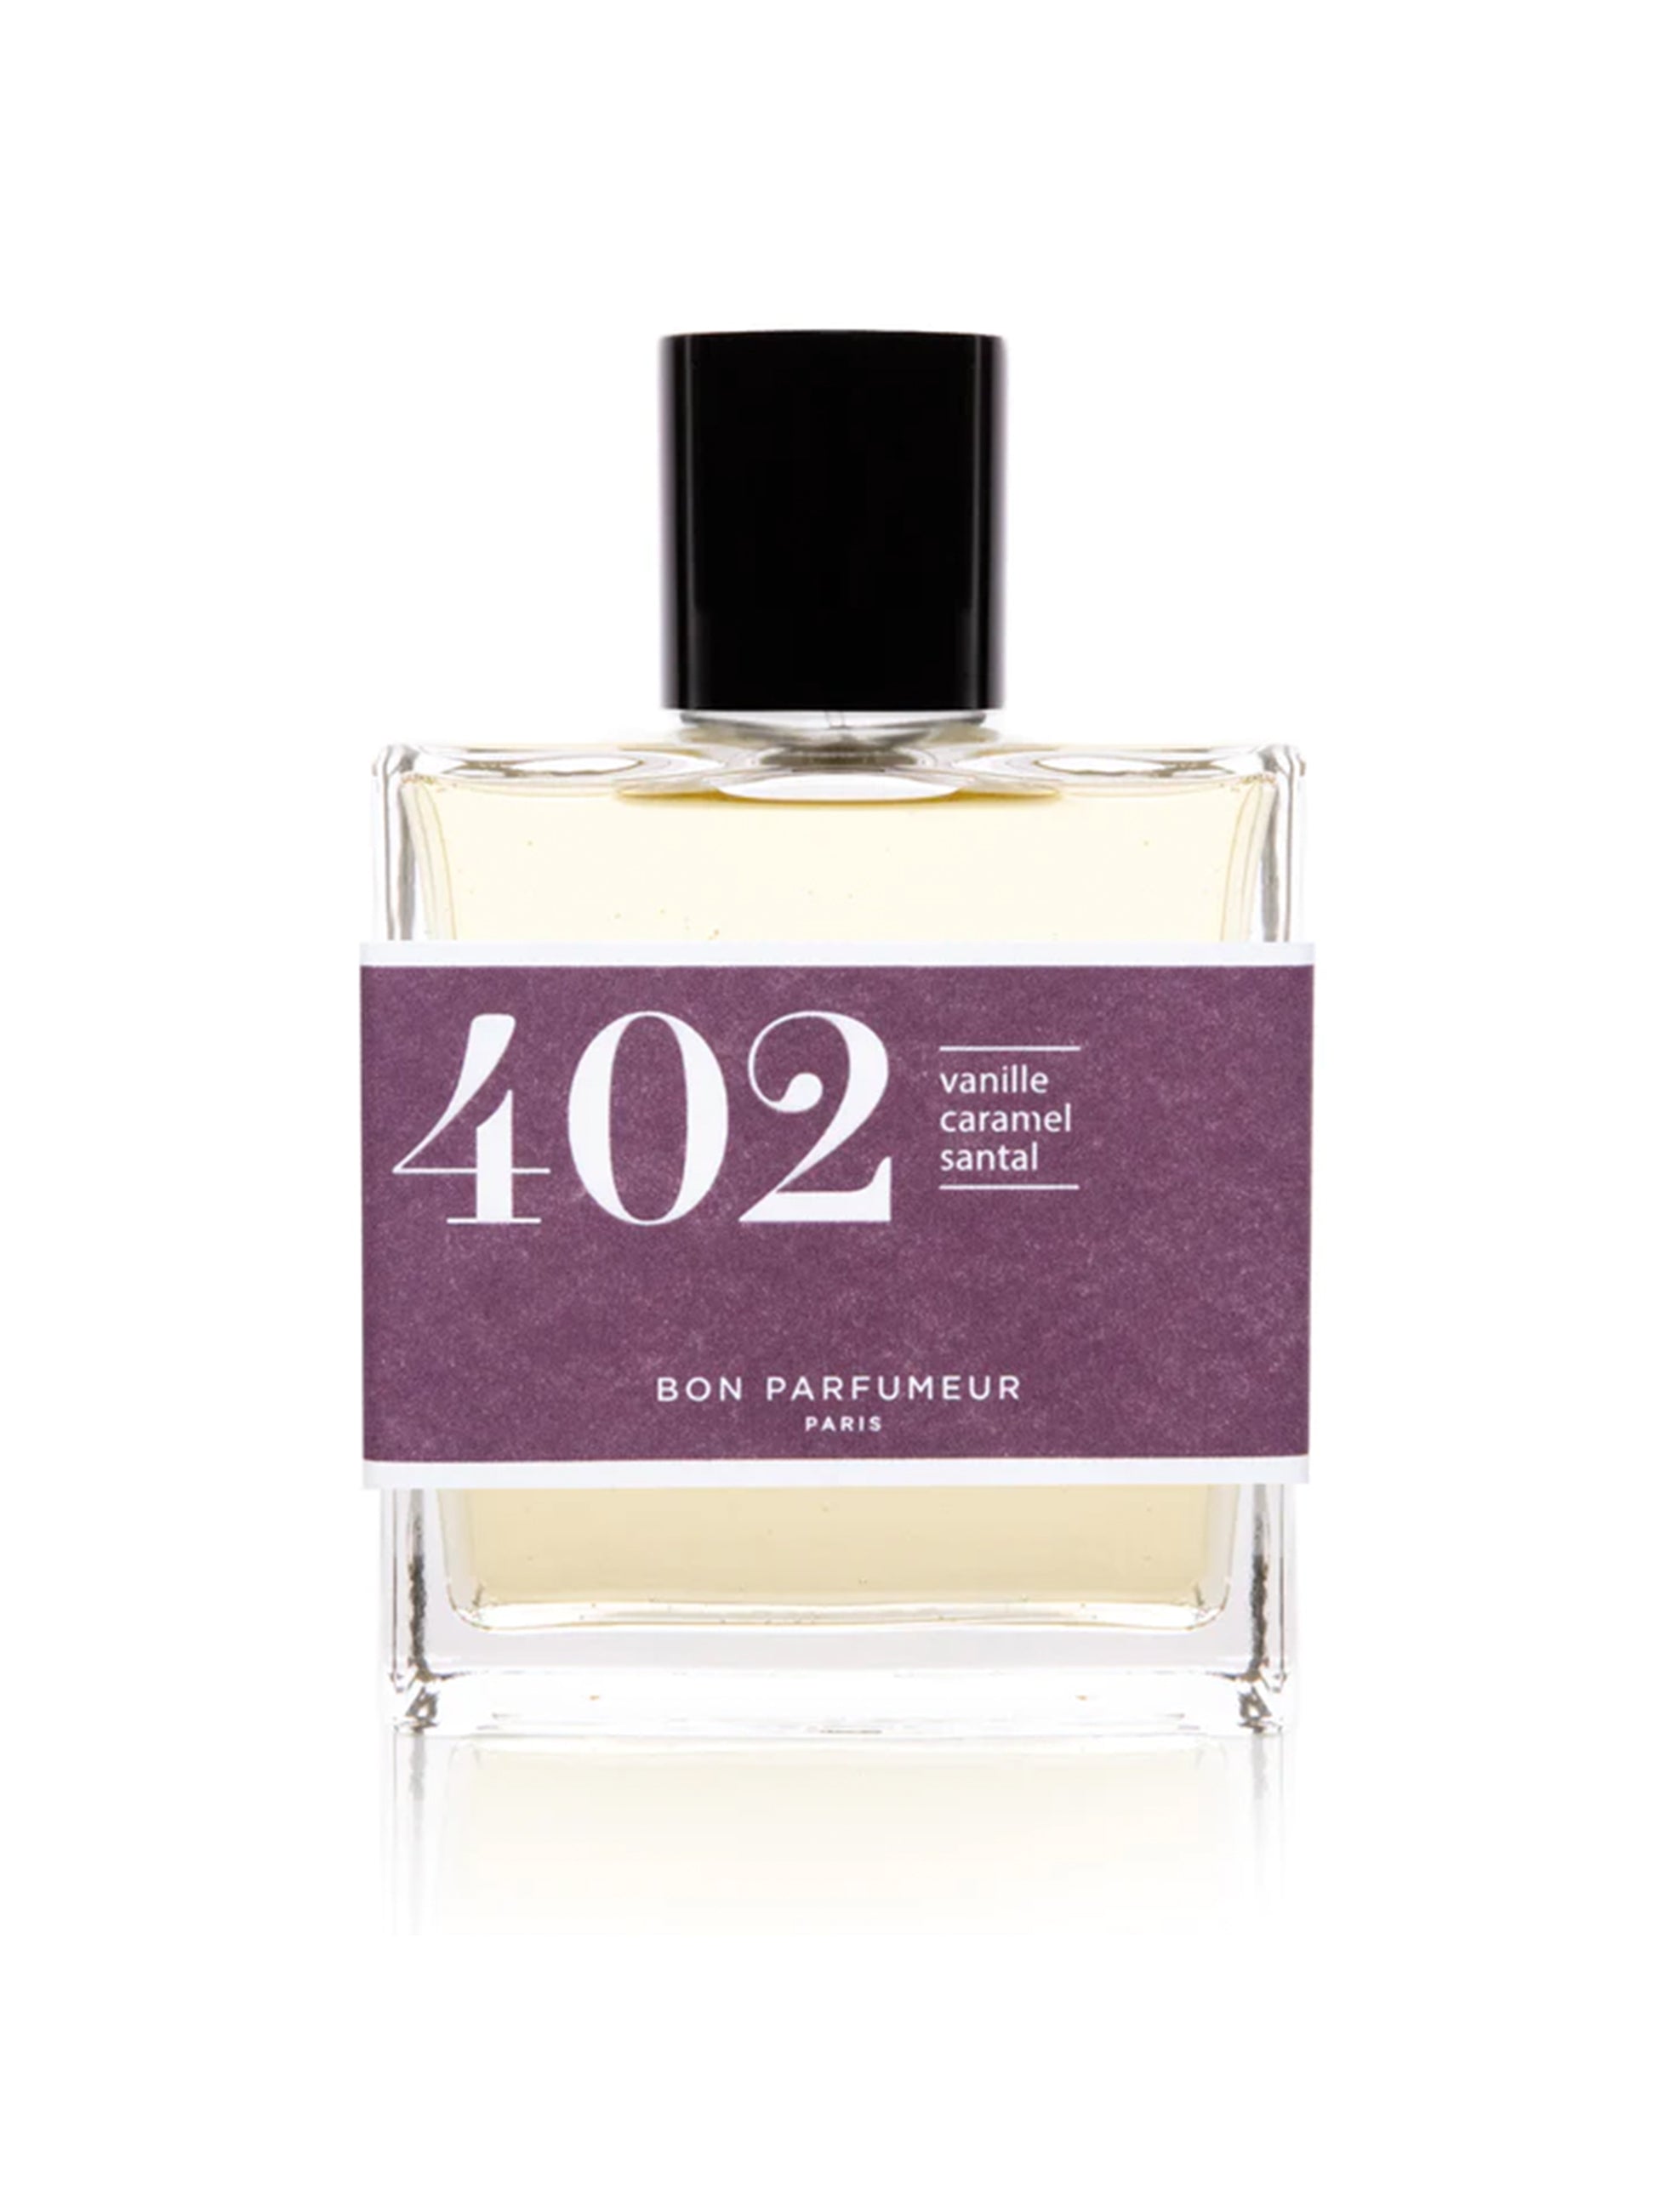 Eau de parfum 402 with vanilla, toffee and sandalwood